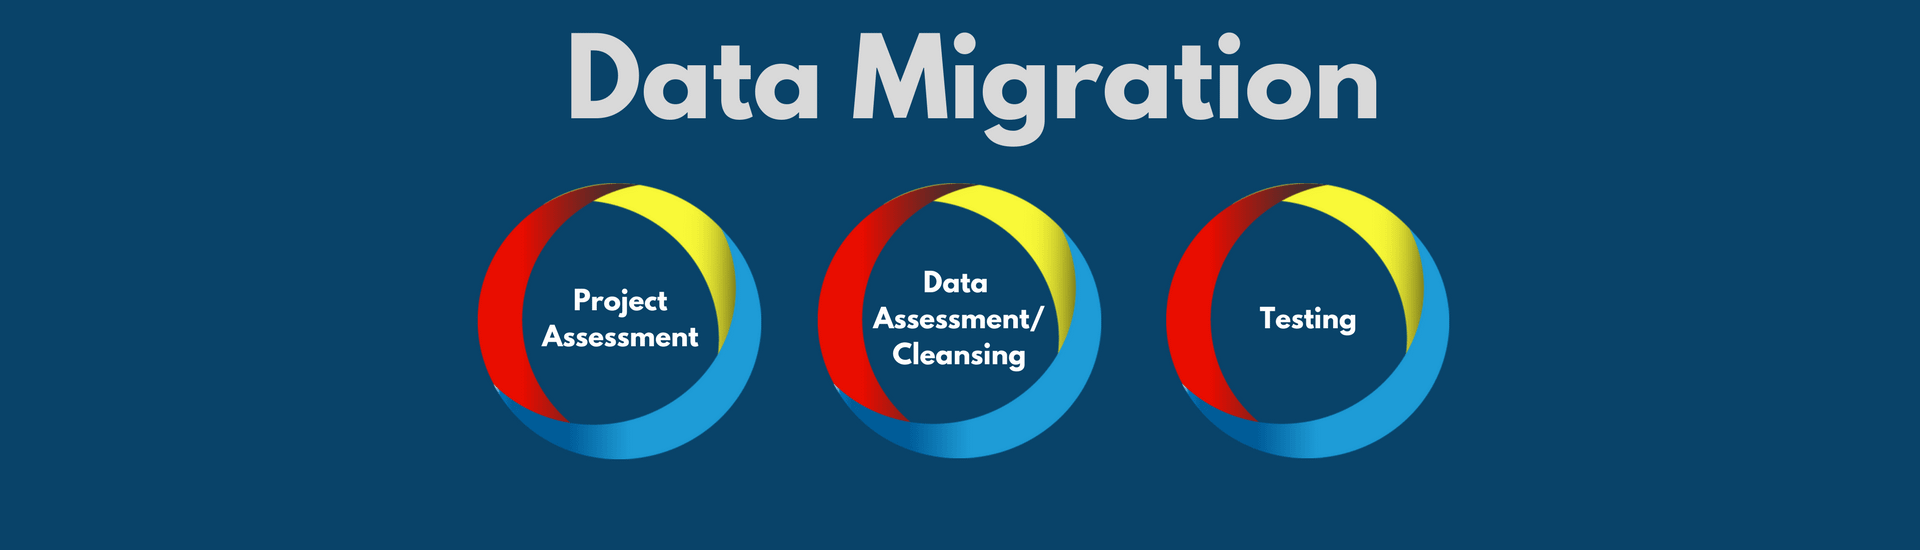 Data-Migration-Graphic